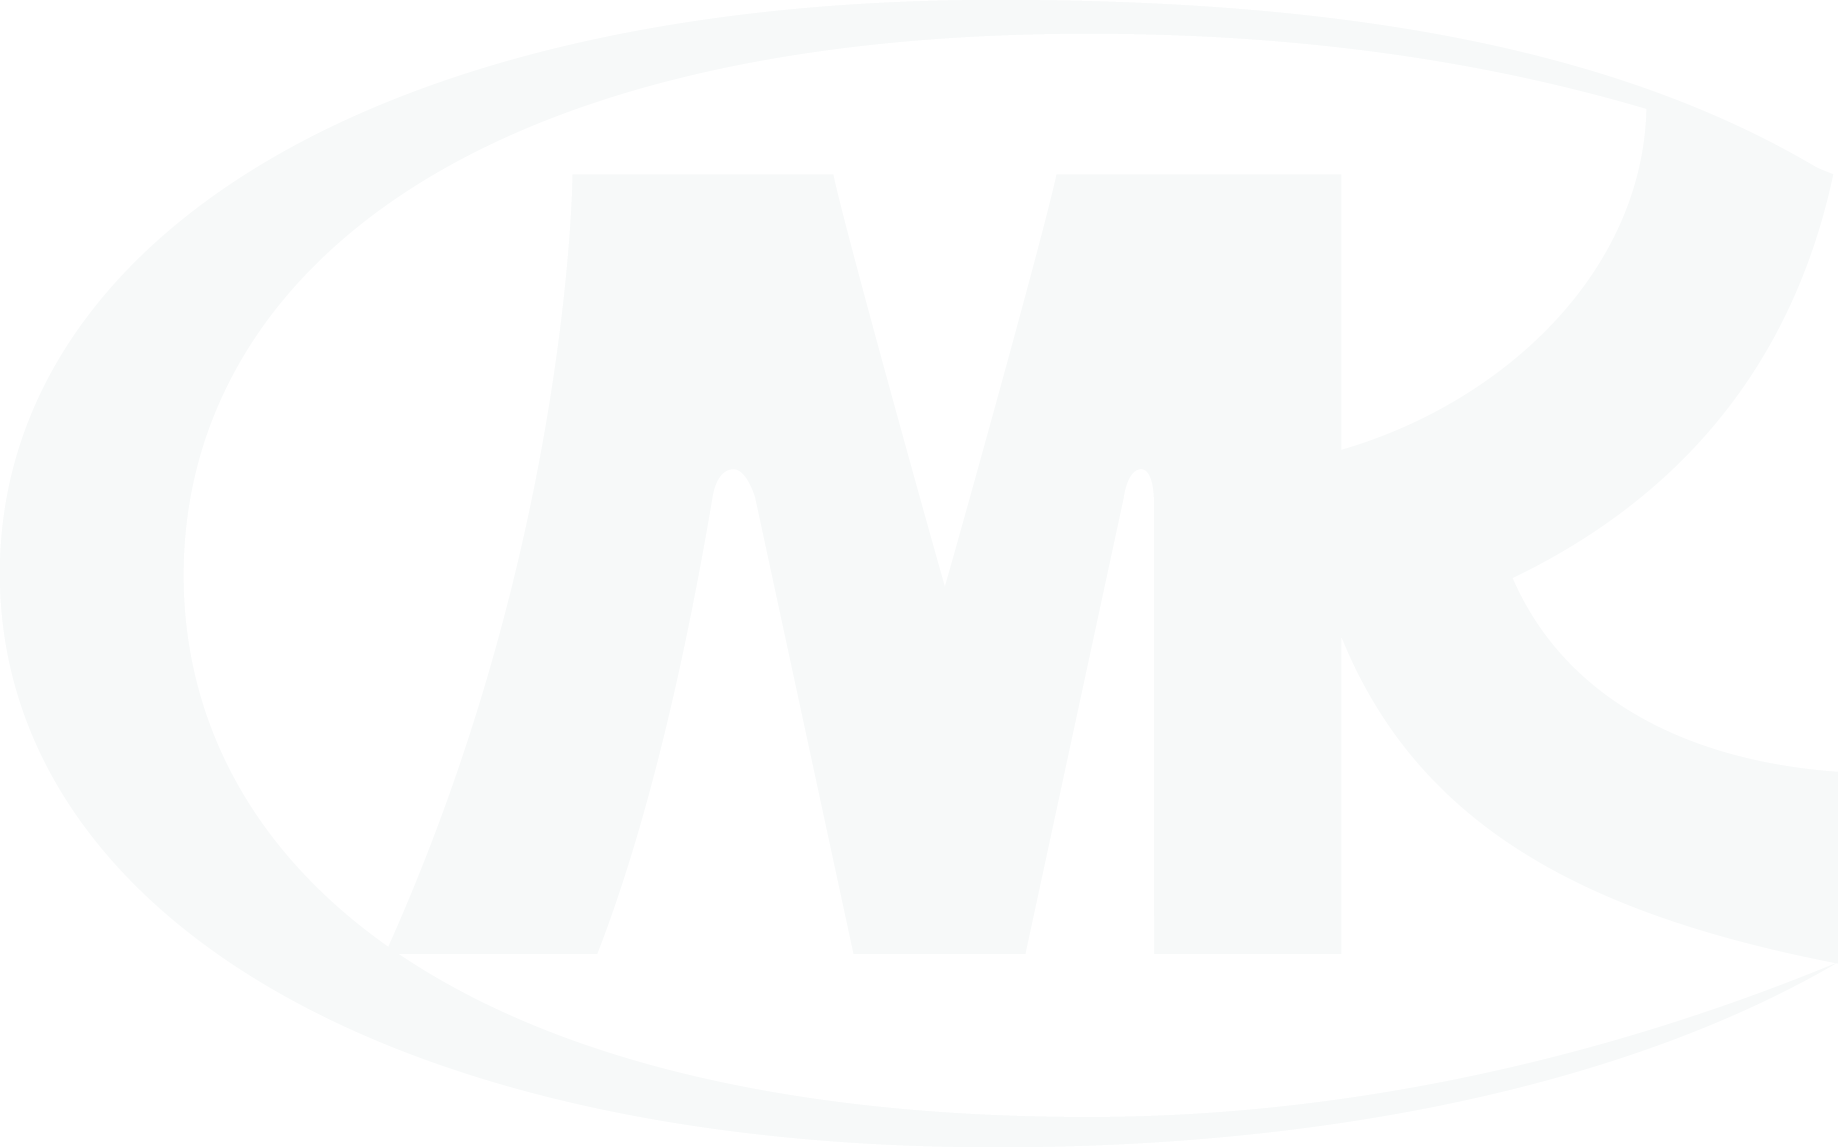 MKC logo